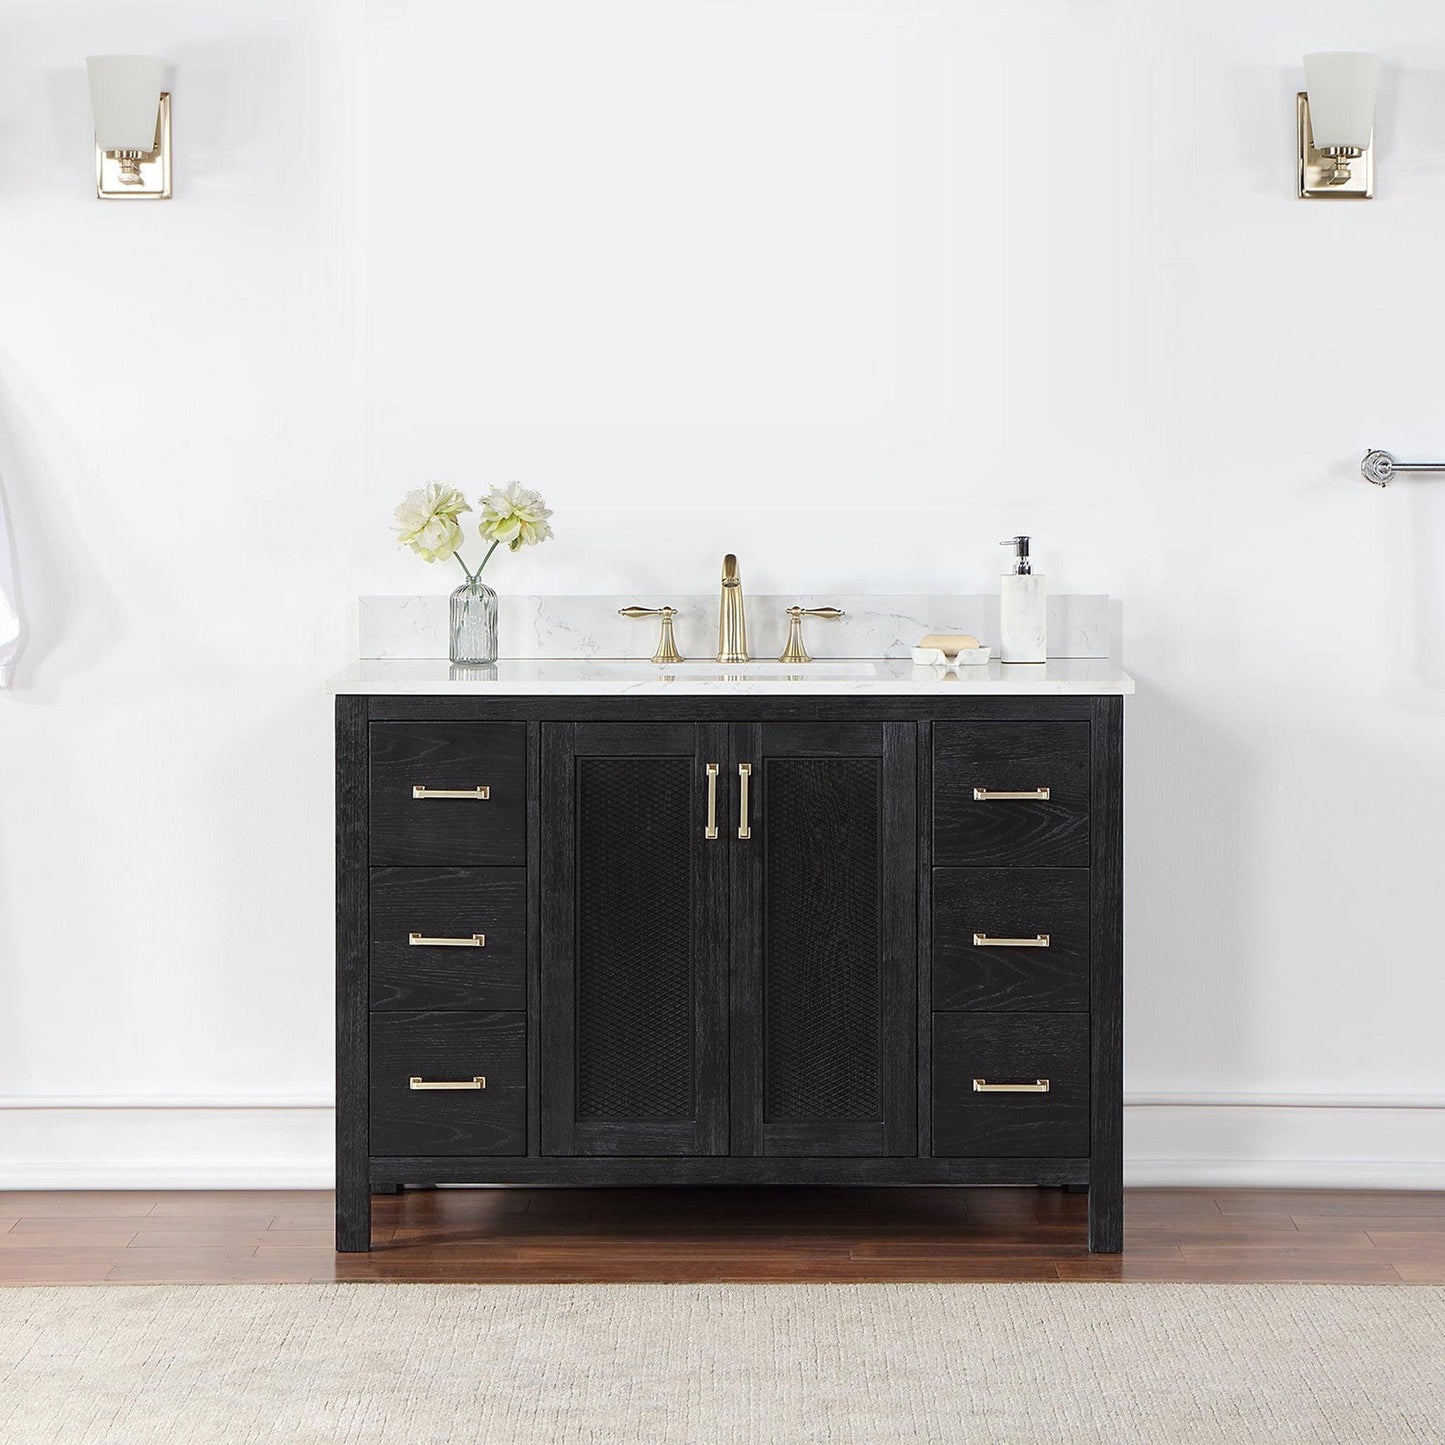 Altair Hadiya 48" Single Black Oak Freestanding Bathroom Vanity Set With Elegant Aosta White Composite Stone Top, Rectangular Undermount Ceramic Sink, Overflow, and Backsplash